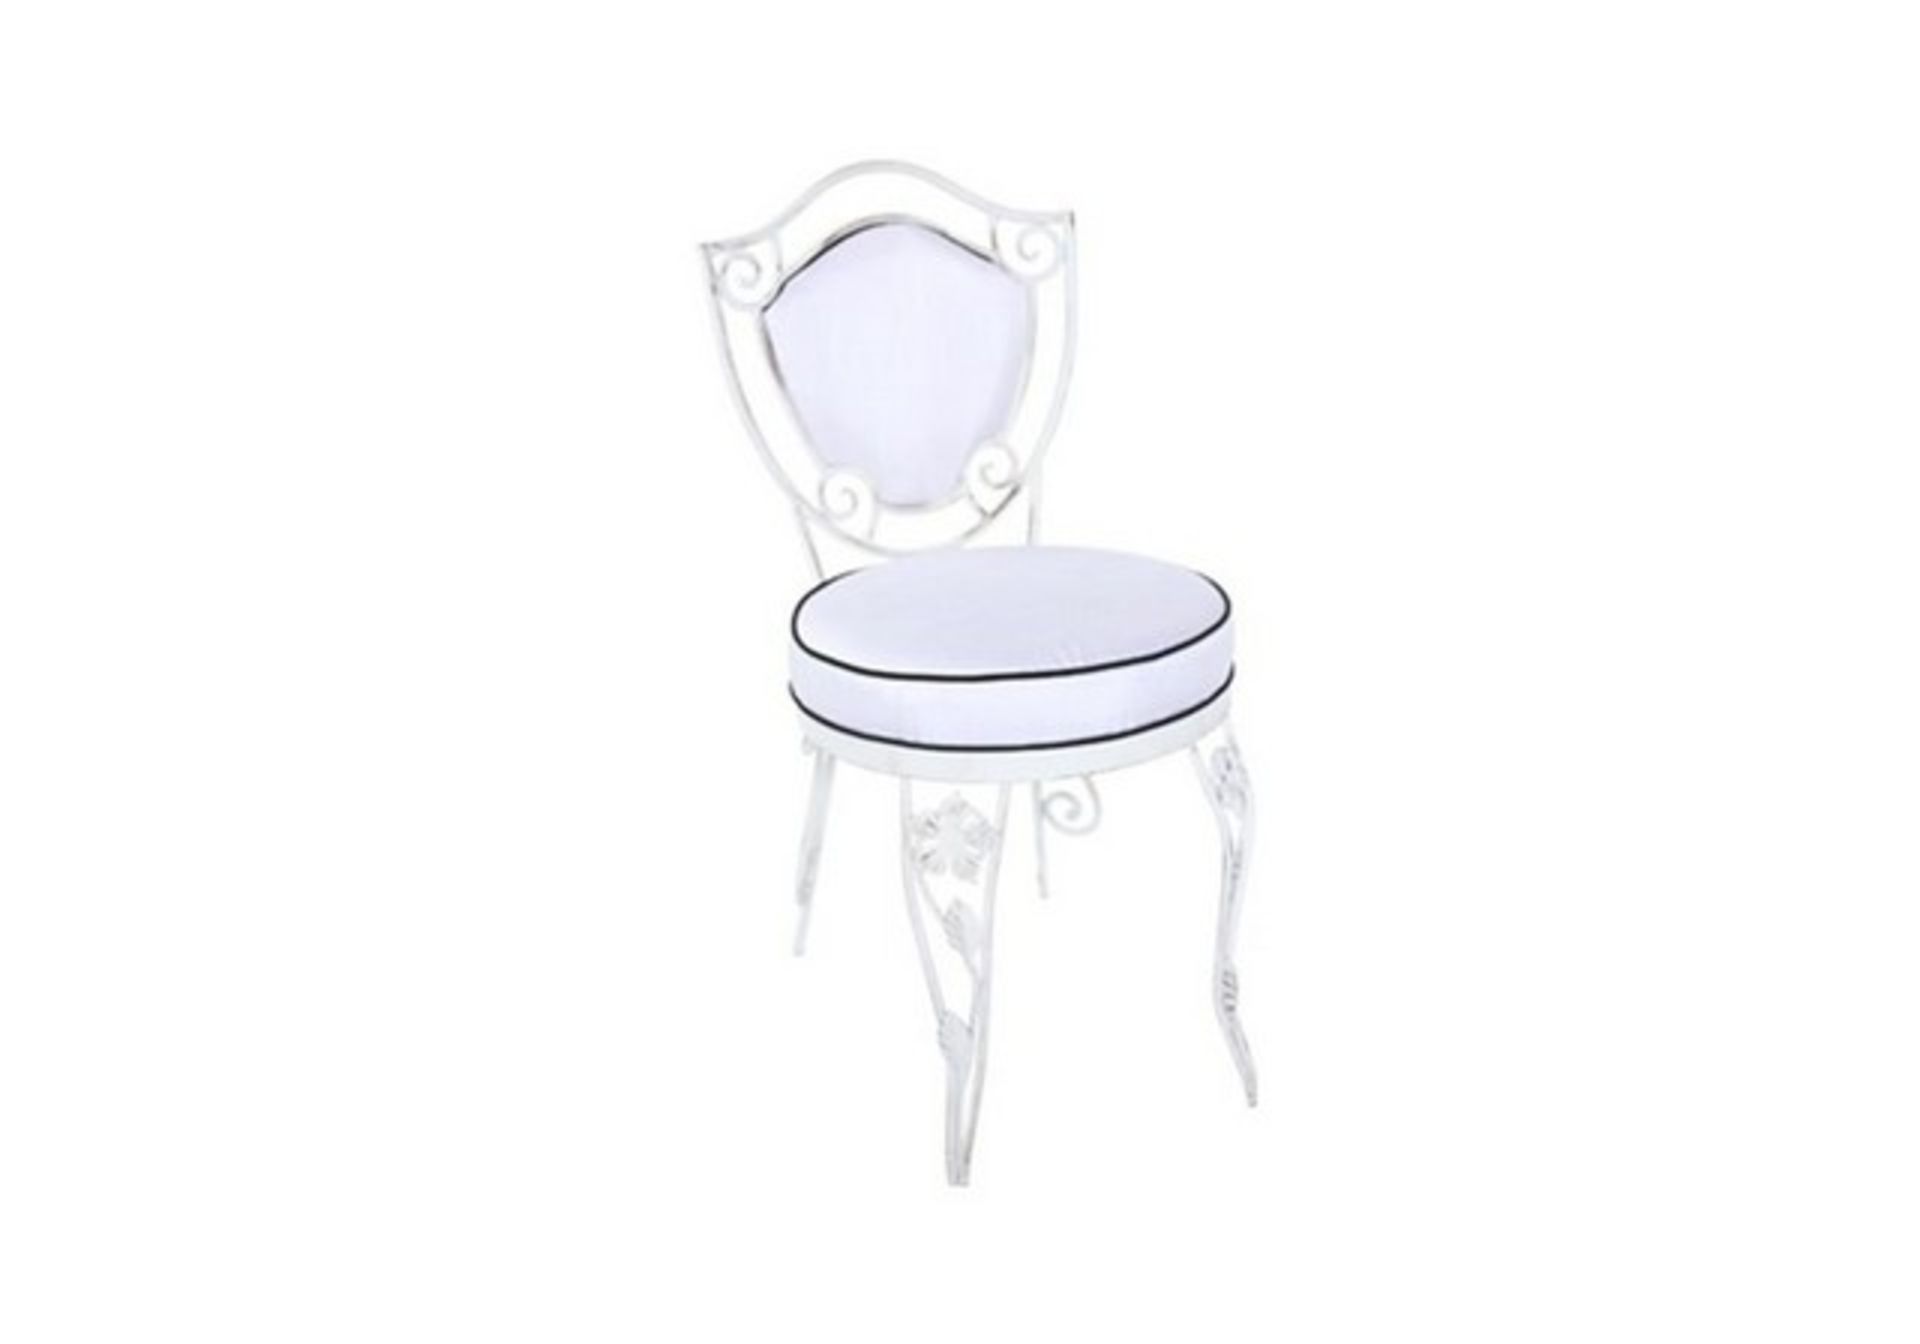 Montecito Chair from Kim Kardashian Wedding - Image 2 of 2